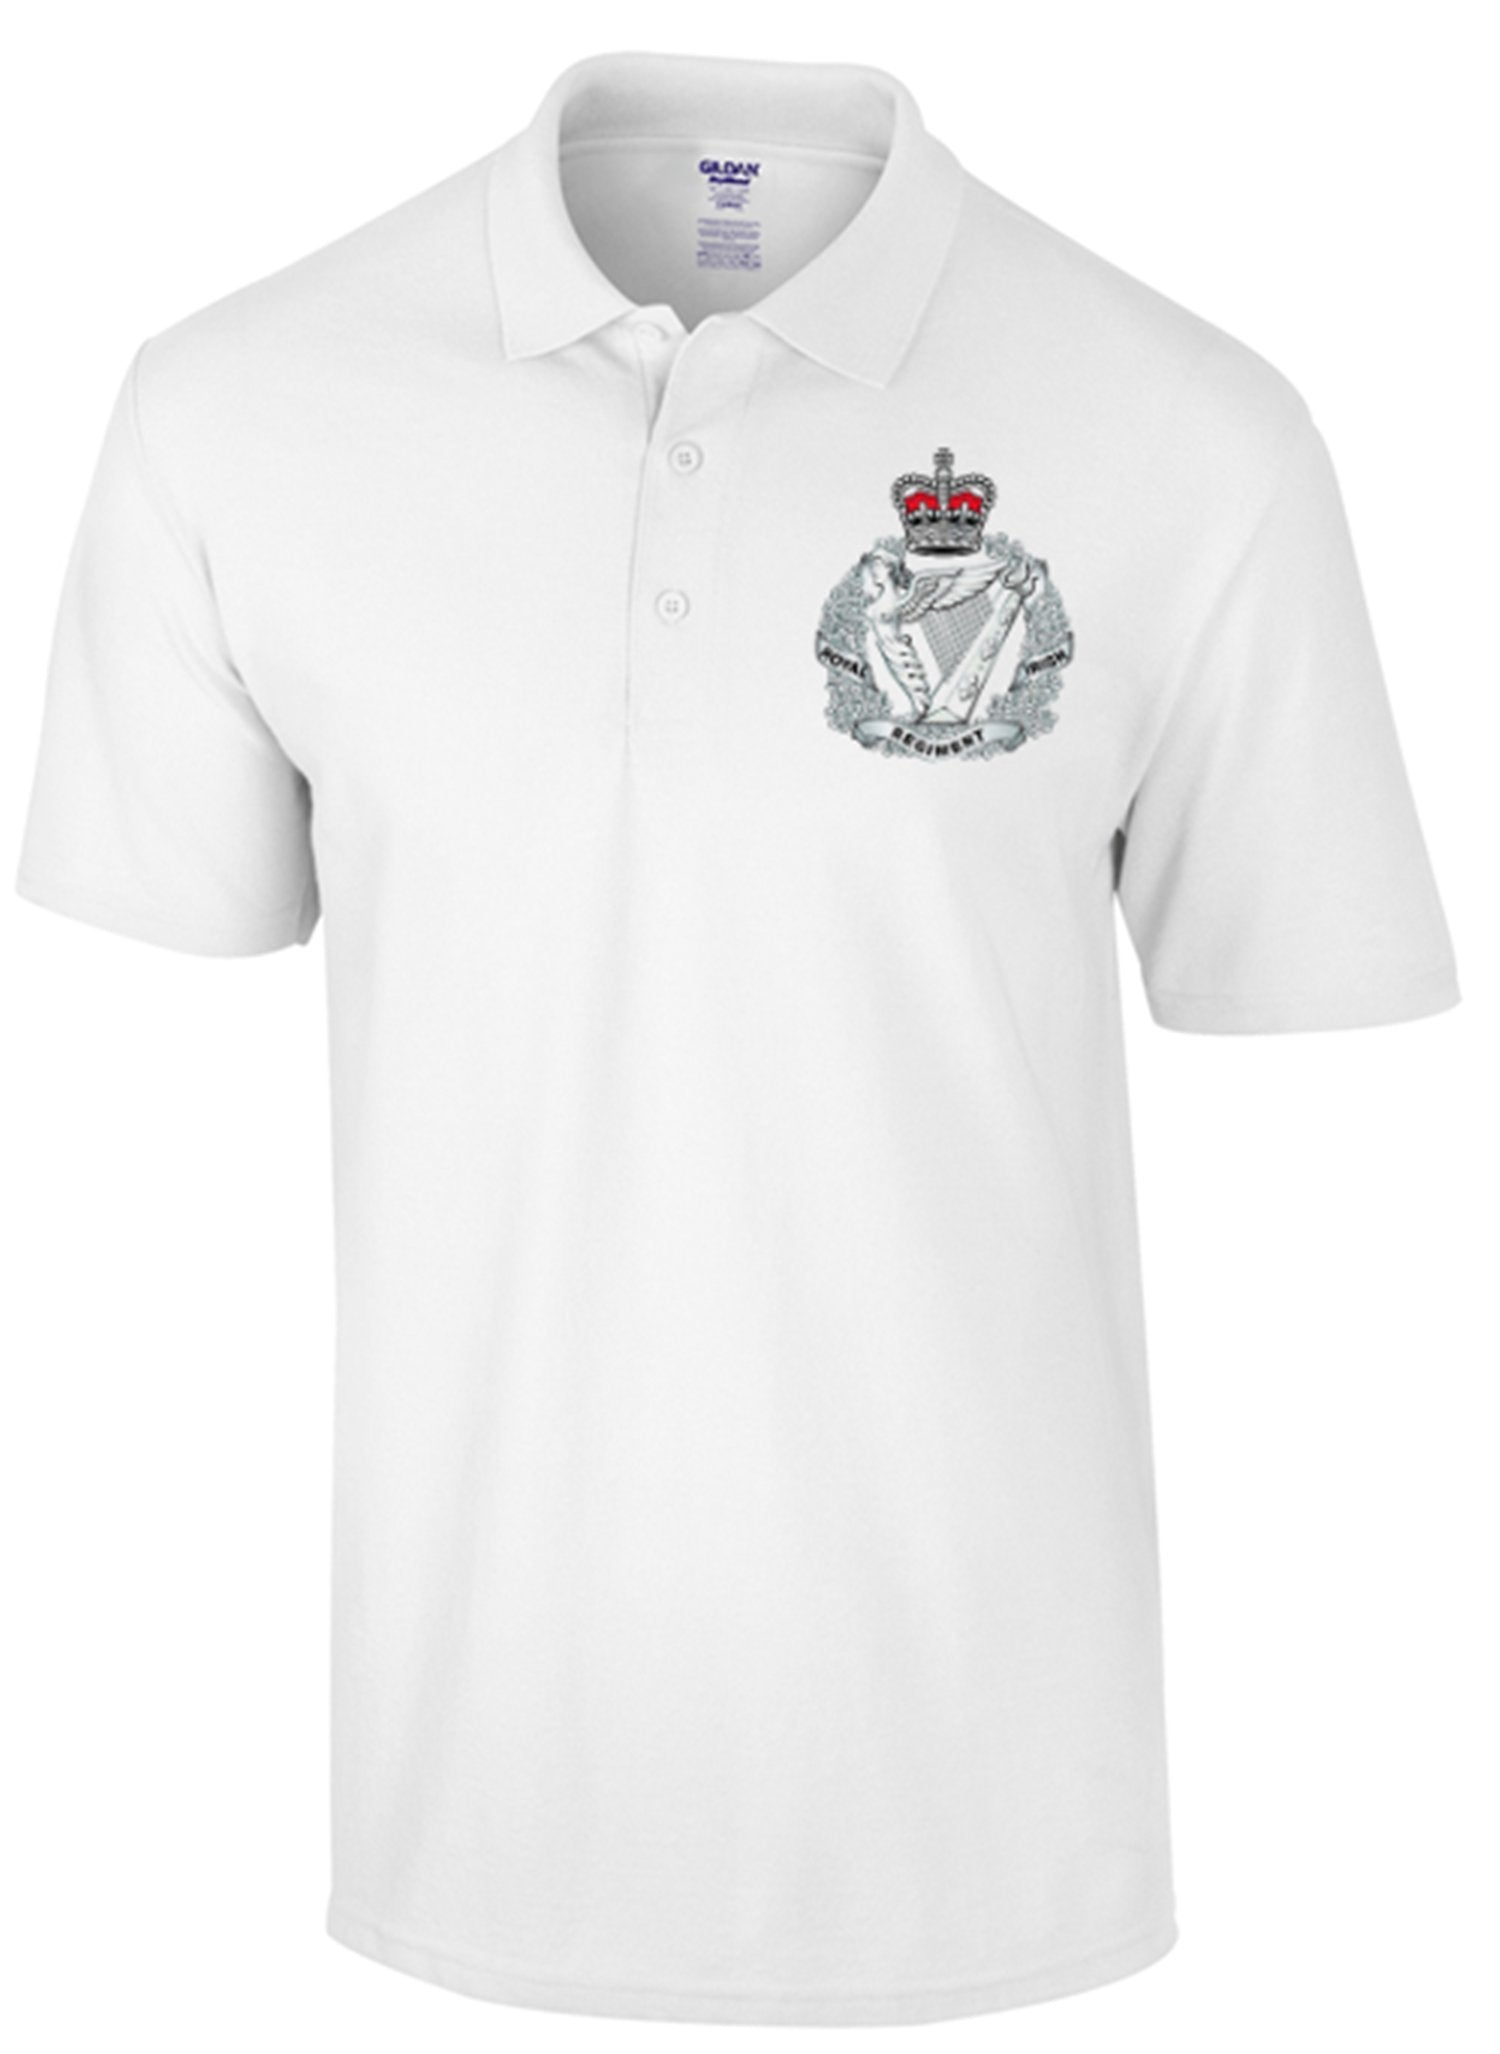 Bear Essentials Clothing. Royal Irish Rangers Polo Shirt - Army 1157 kit White / S Army 1157 Kit